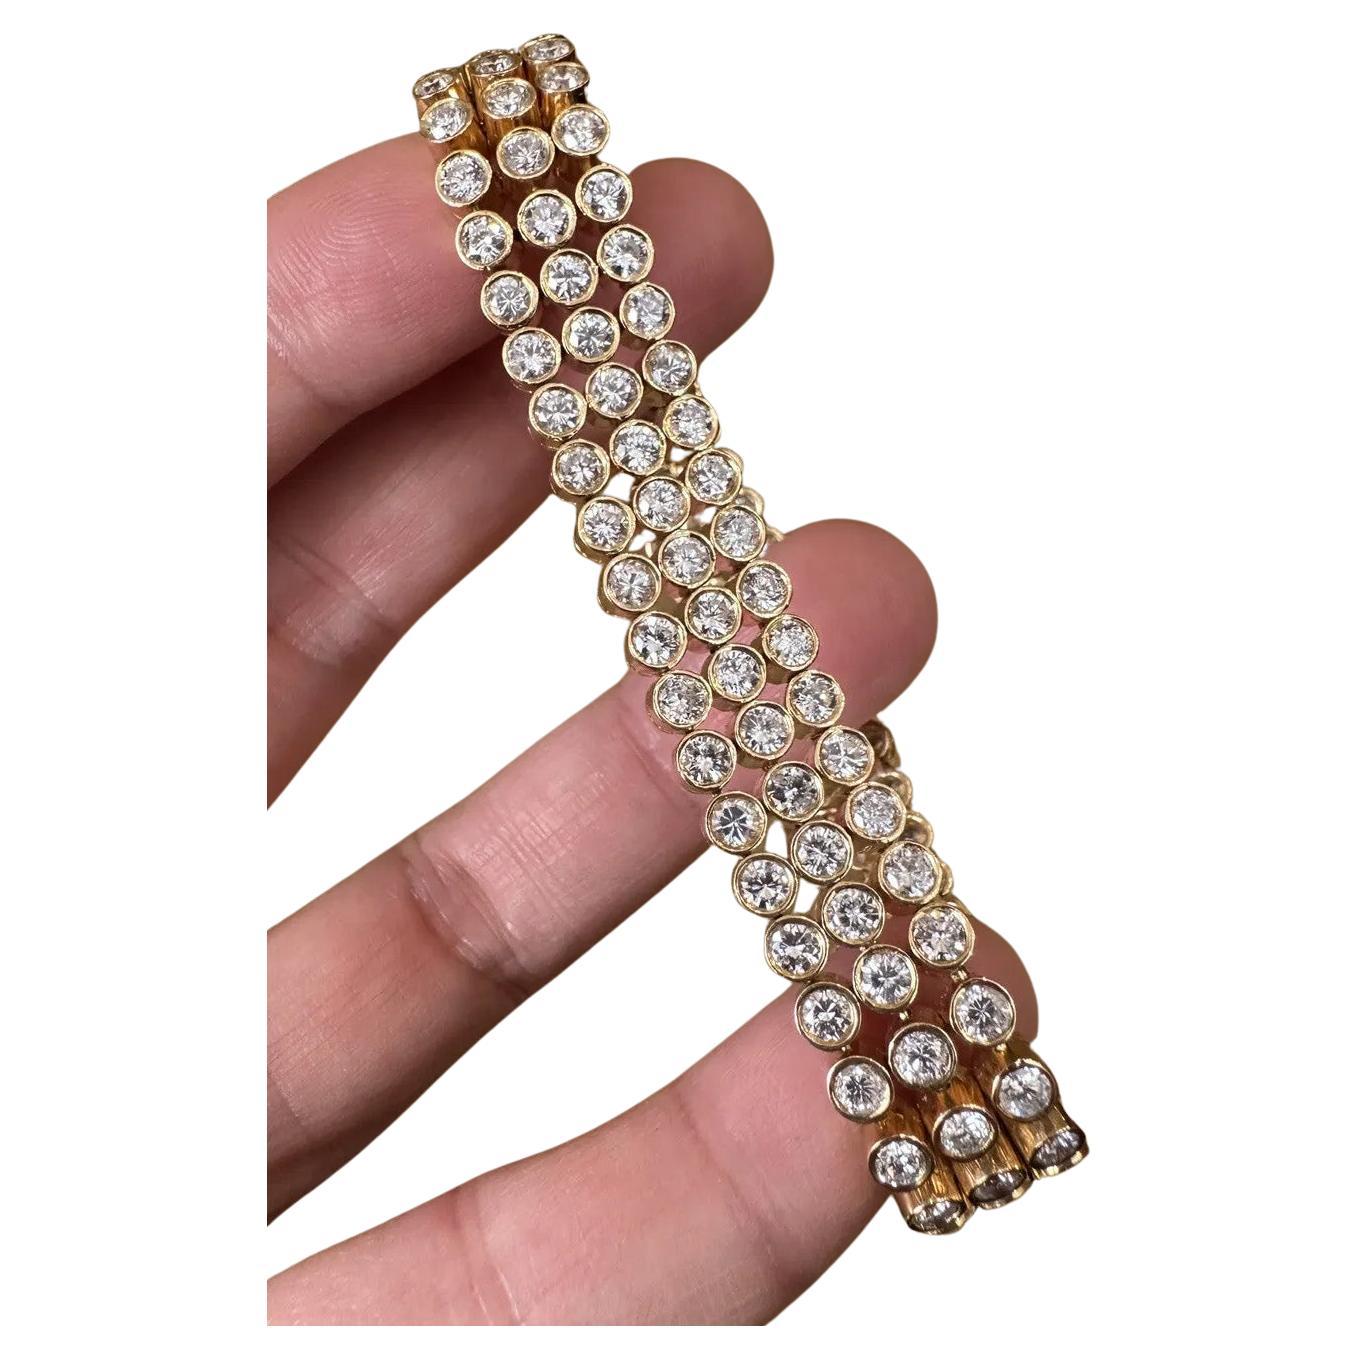 12.42 Carats Three Row Bezel Set Diamond Bracelet in 18k Yellow Gold For Sale